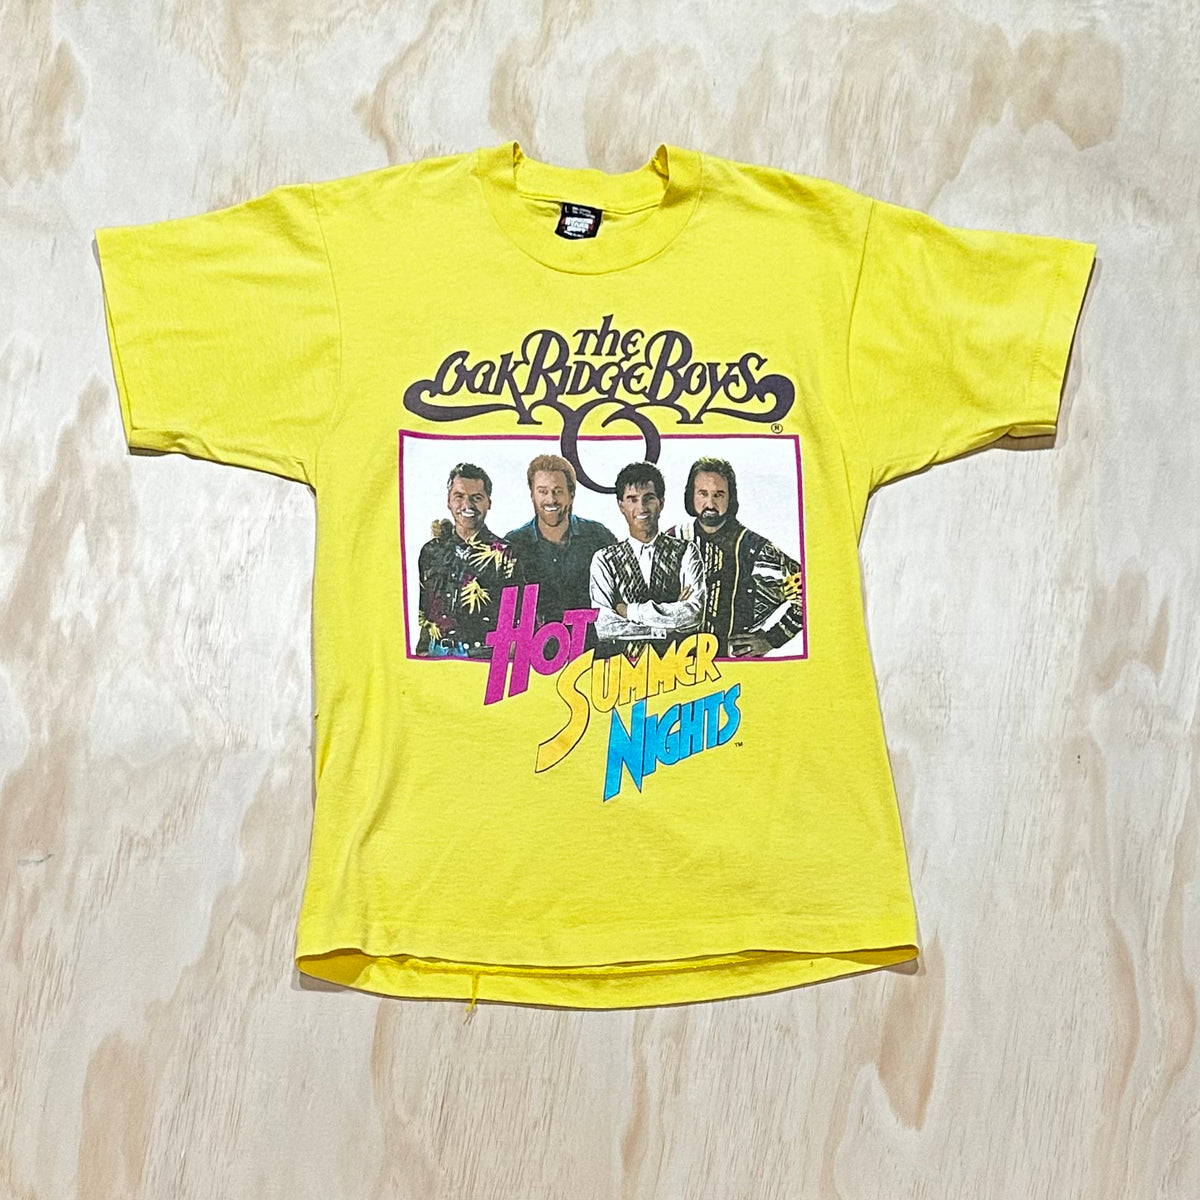 Vintage 80s The Oak Ridge Boys T Shirt Hot Summer Nights